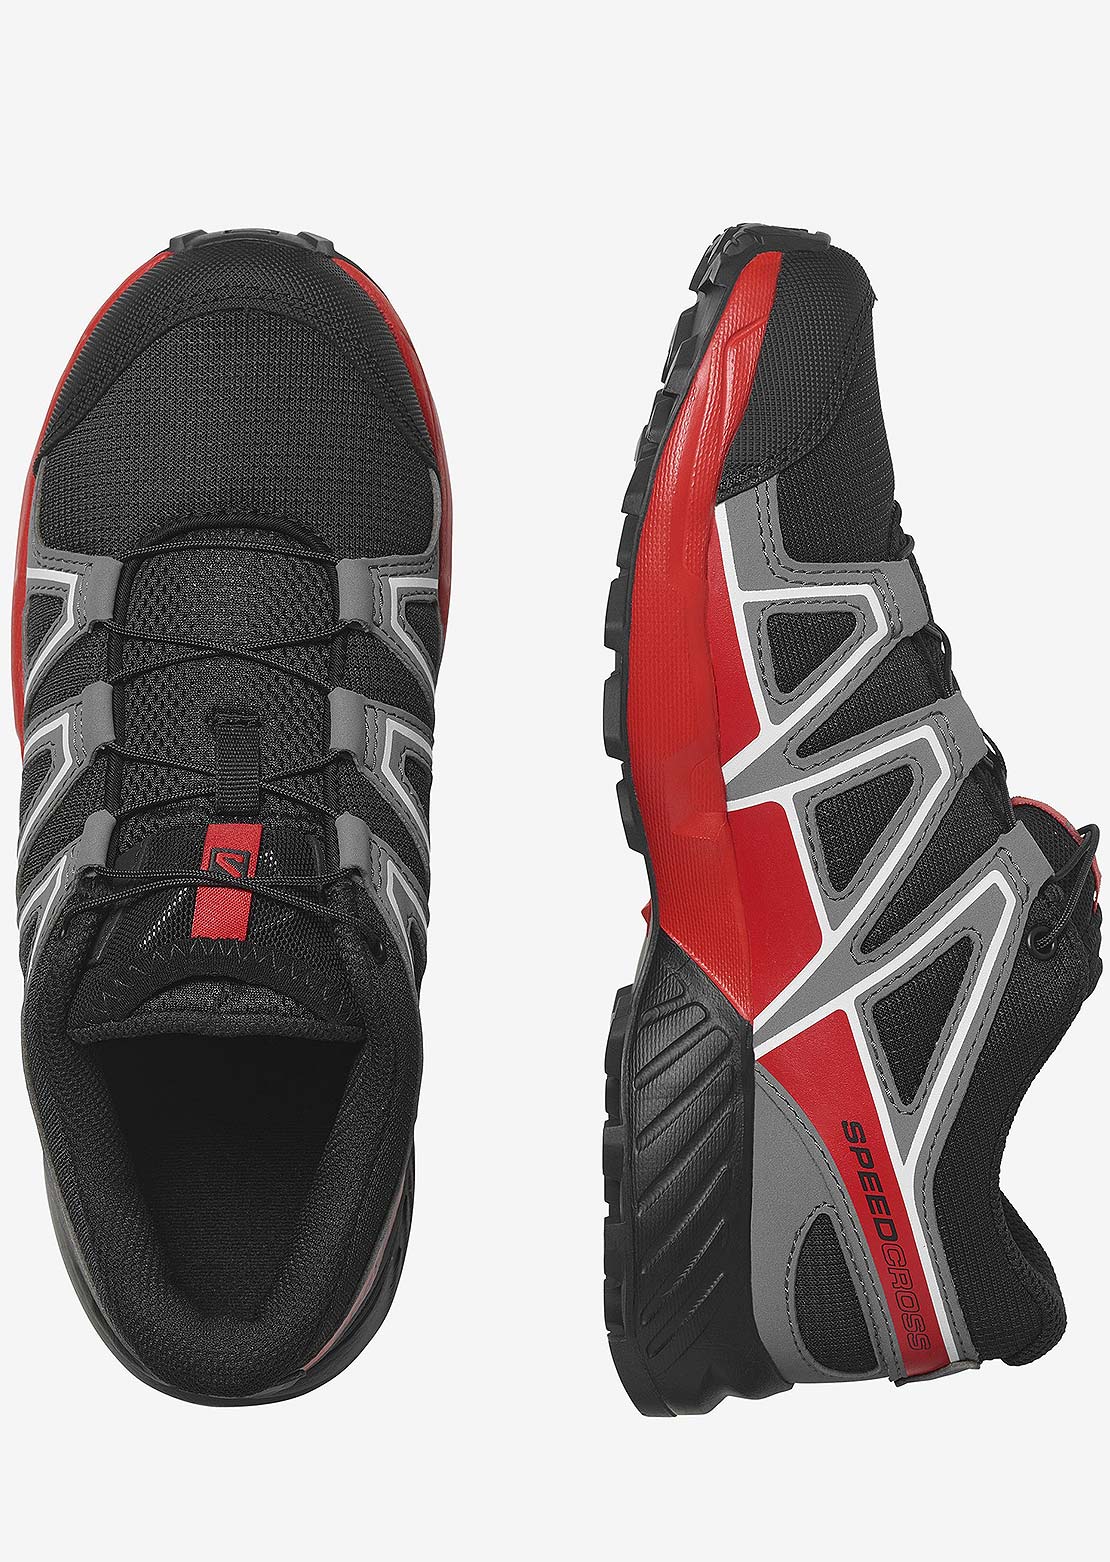 Salomon Junior Speedcross Shoes Black/Qush/Hgrsre